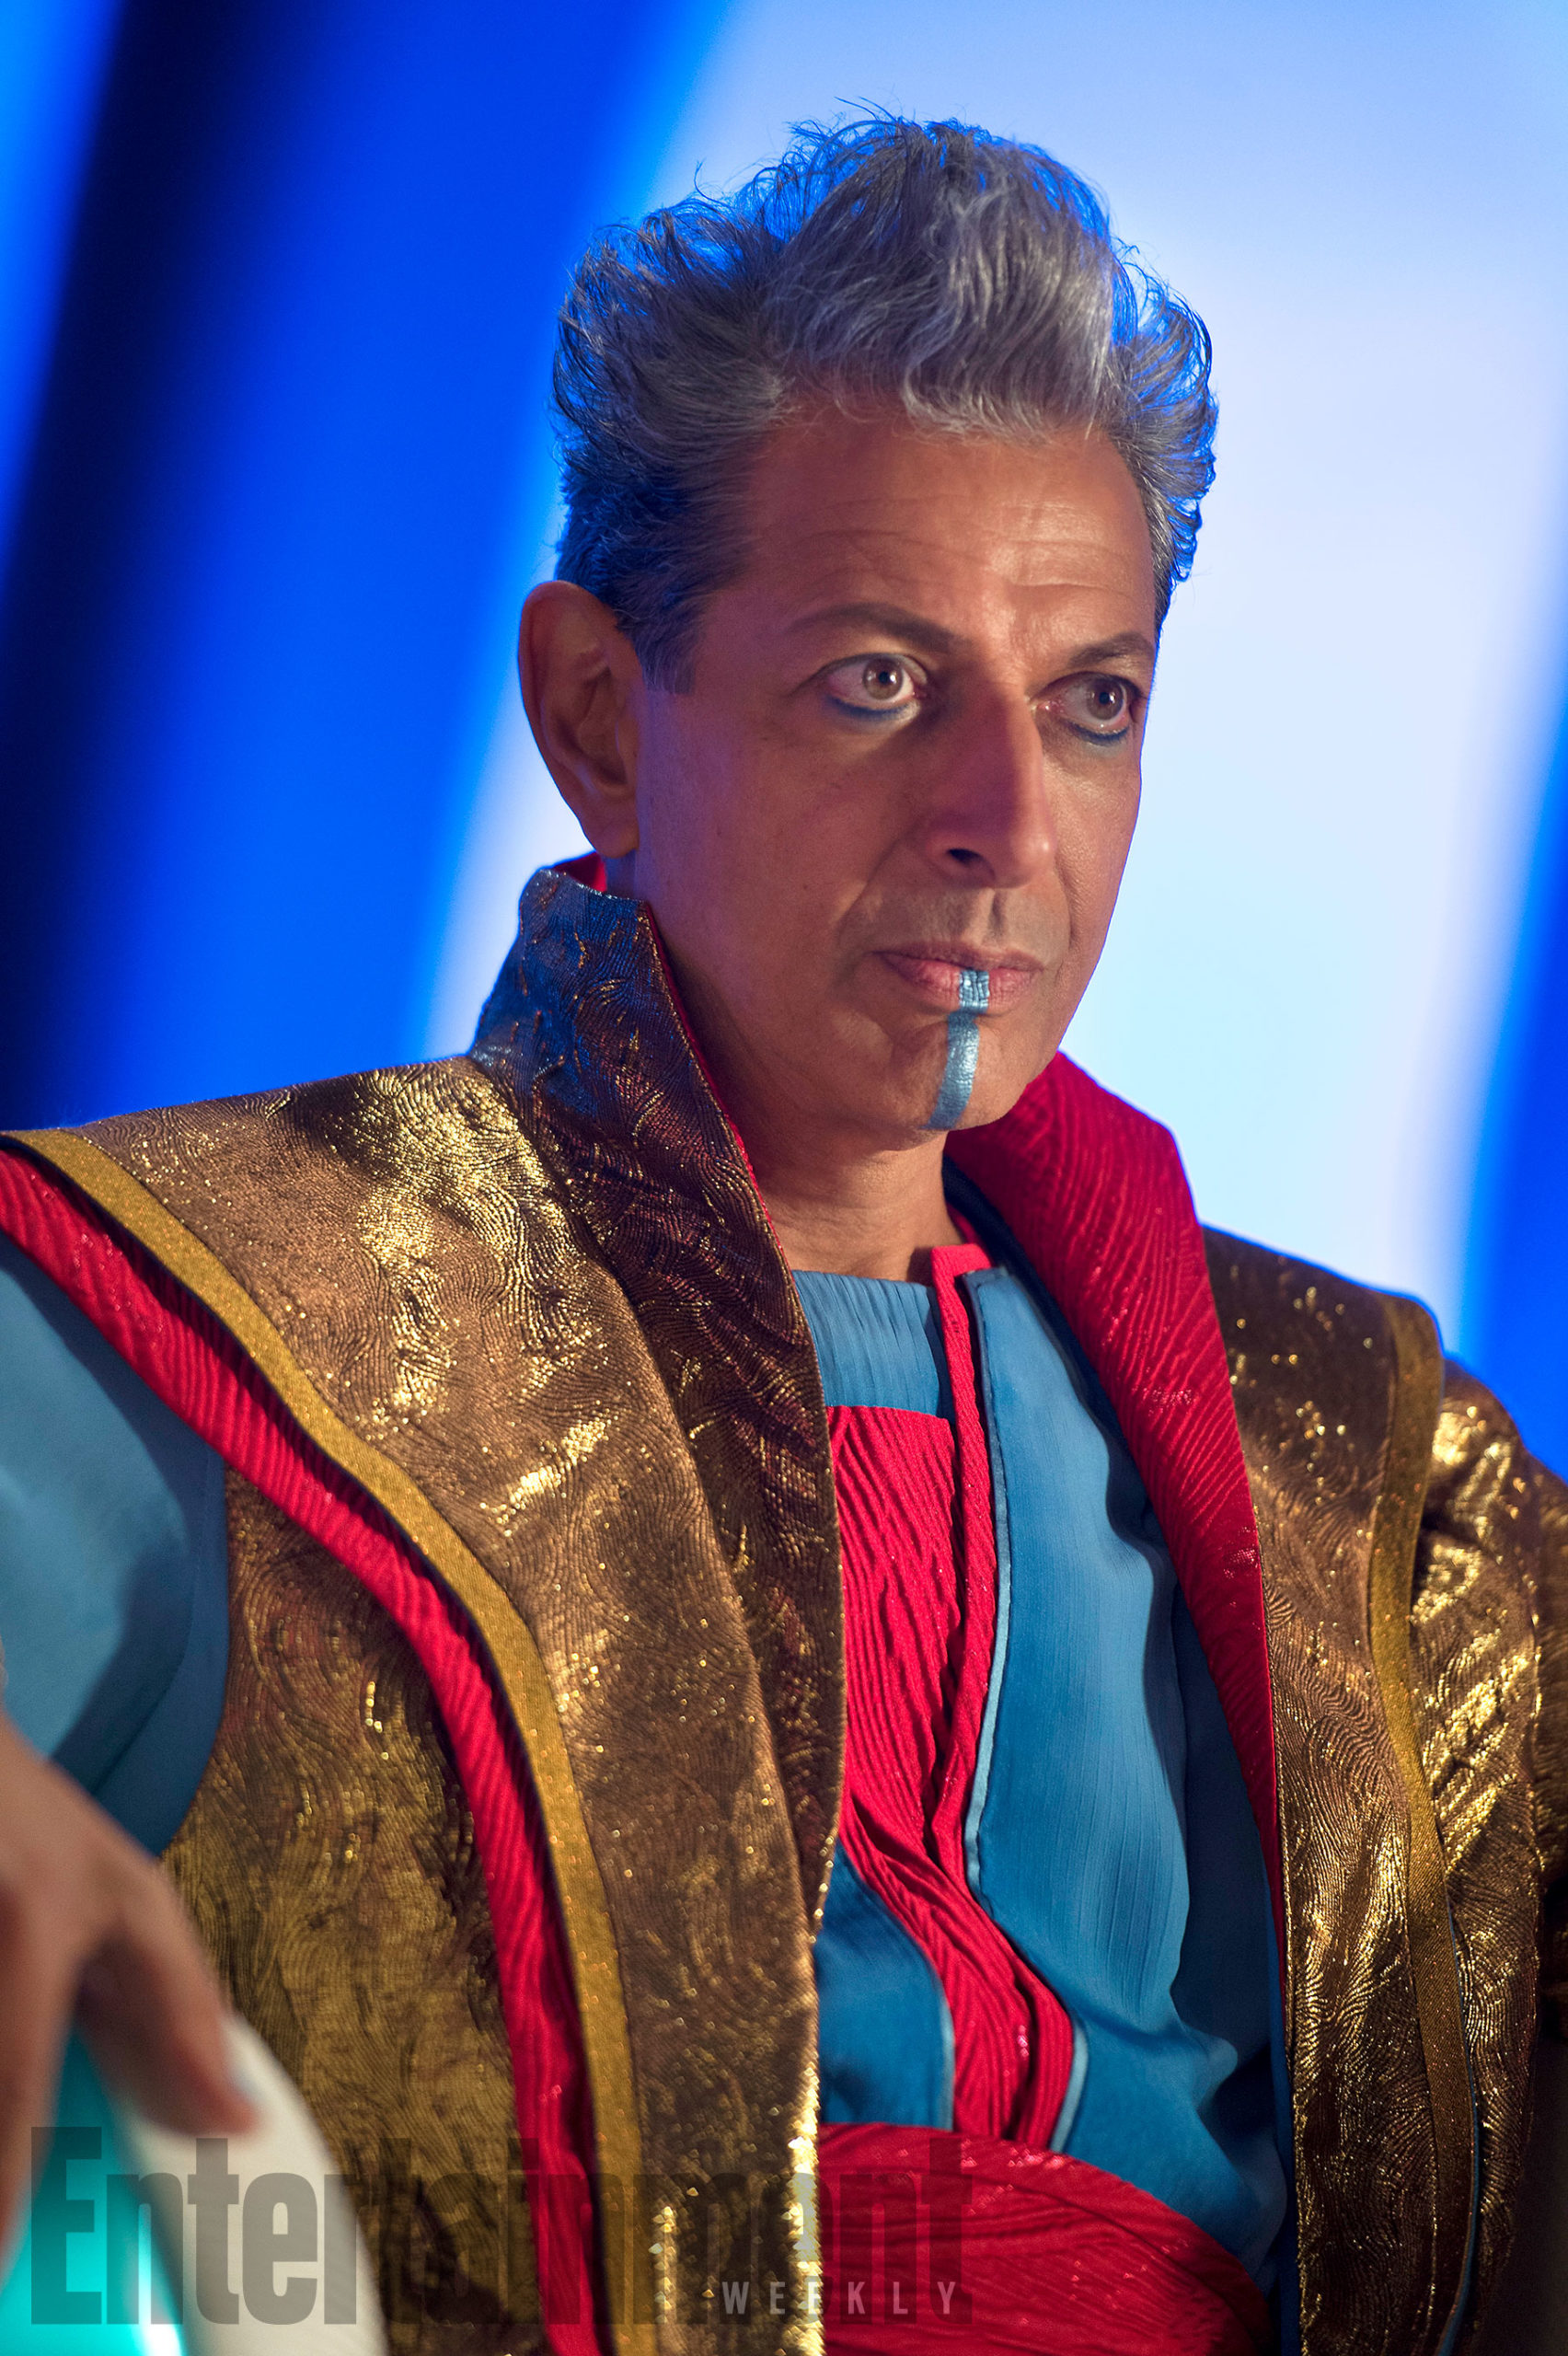 Jeff Goldblum Looks Just As Weird As You Hoped In More New Thor: Ragnarok Photos